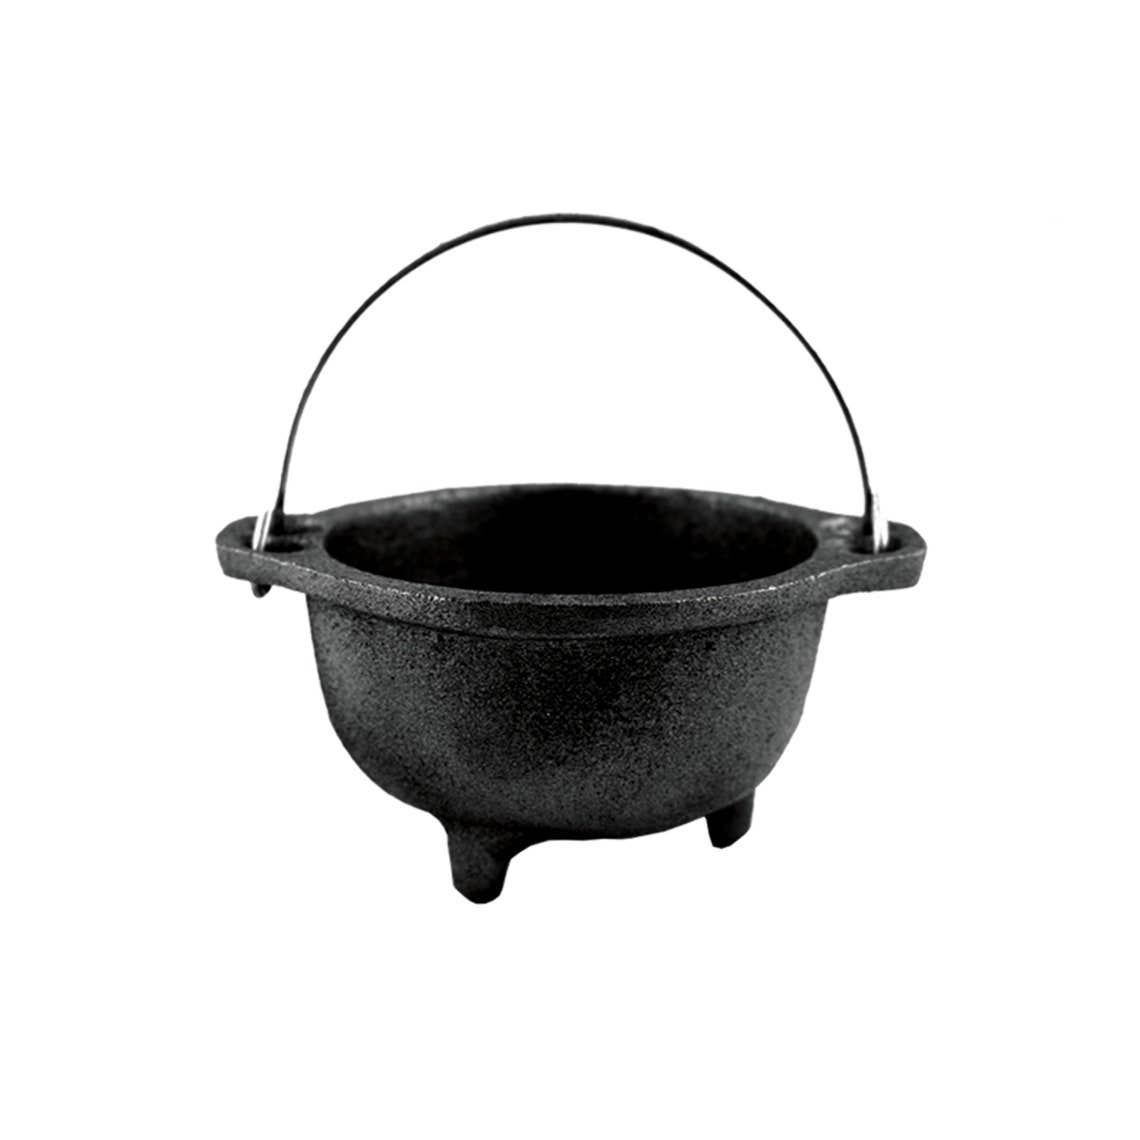 Plain Cast Iron Cauldron Bowl 3 inch with Hanging Holder